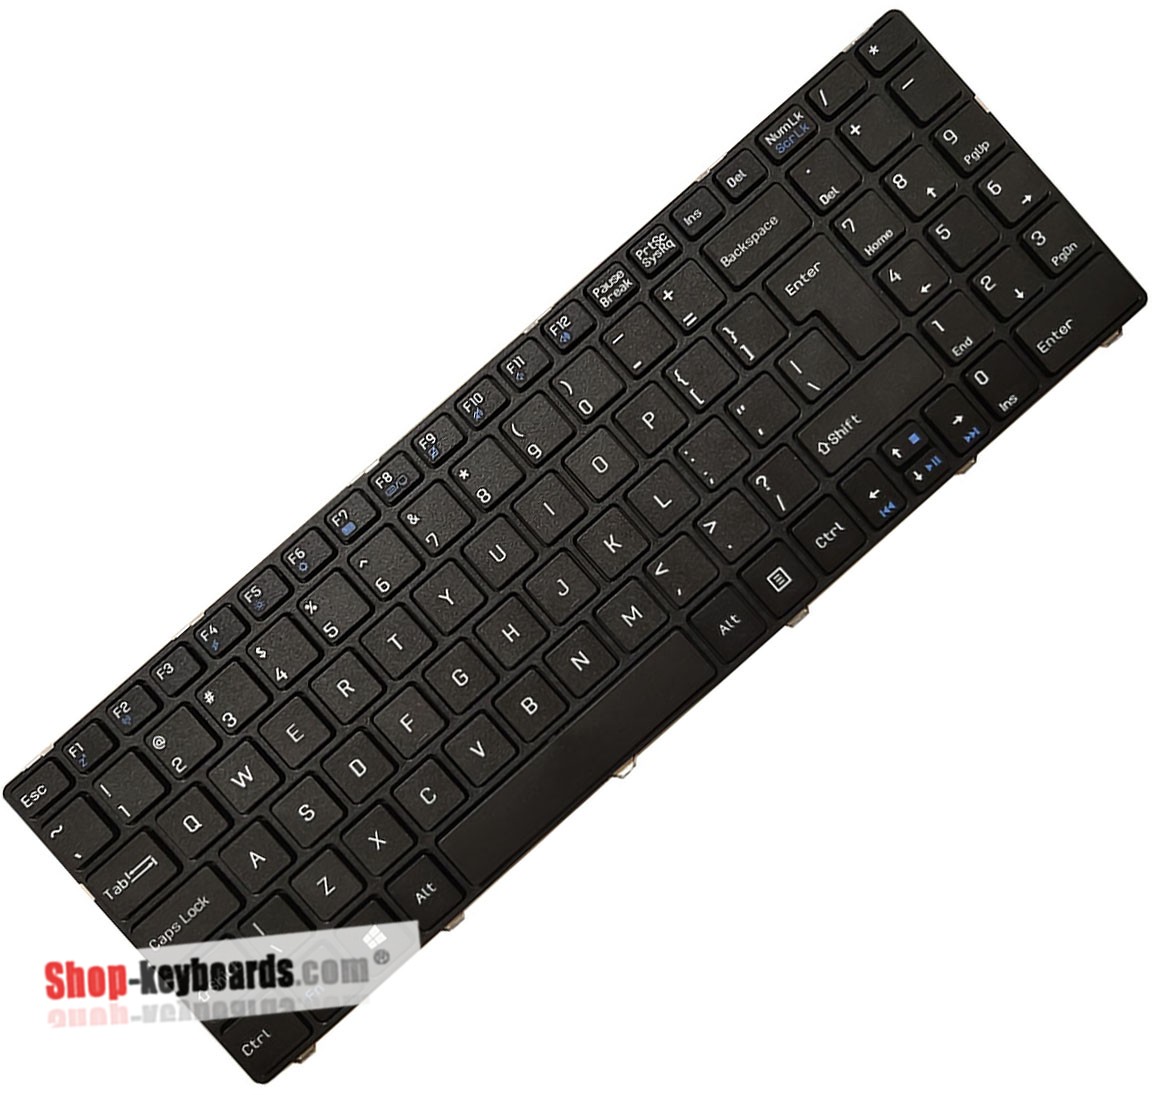 Medion akoya E6217 Keyboard replacement